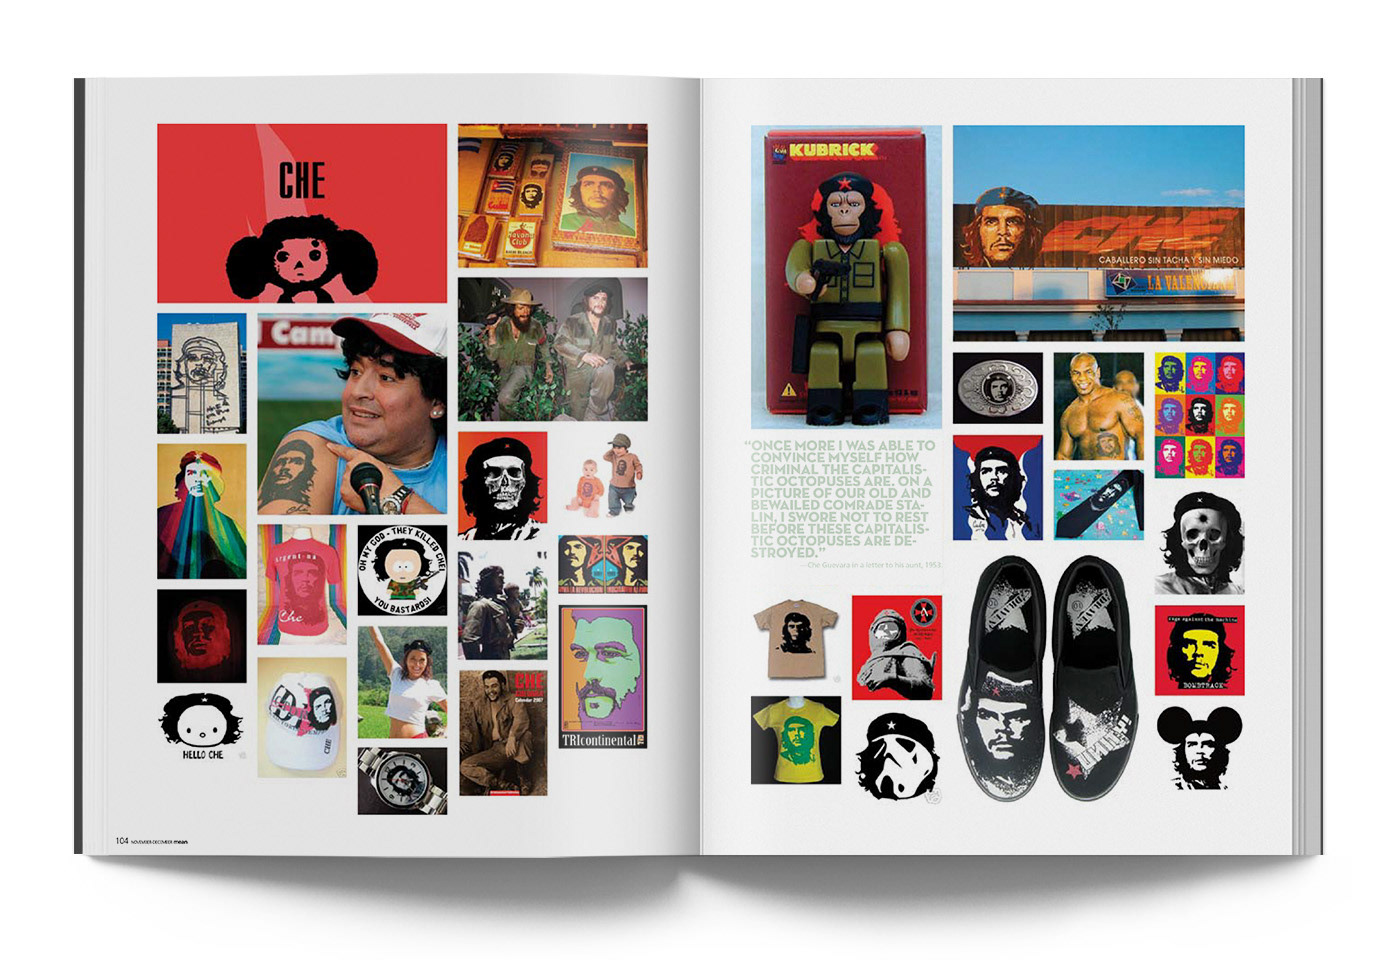 magazine Magazine design cover design mean magazine bill smith designsimple Layout spreads editorial